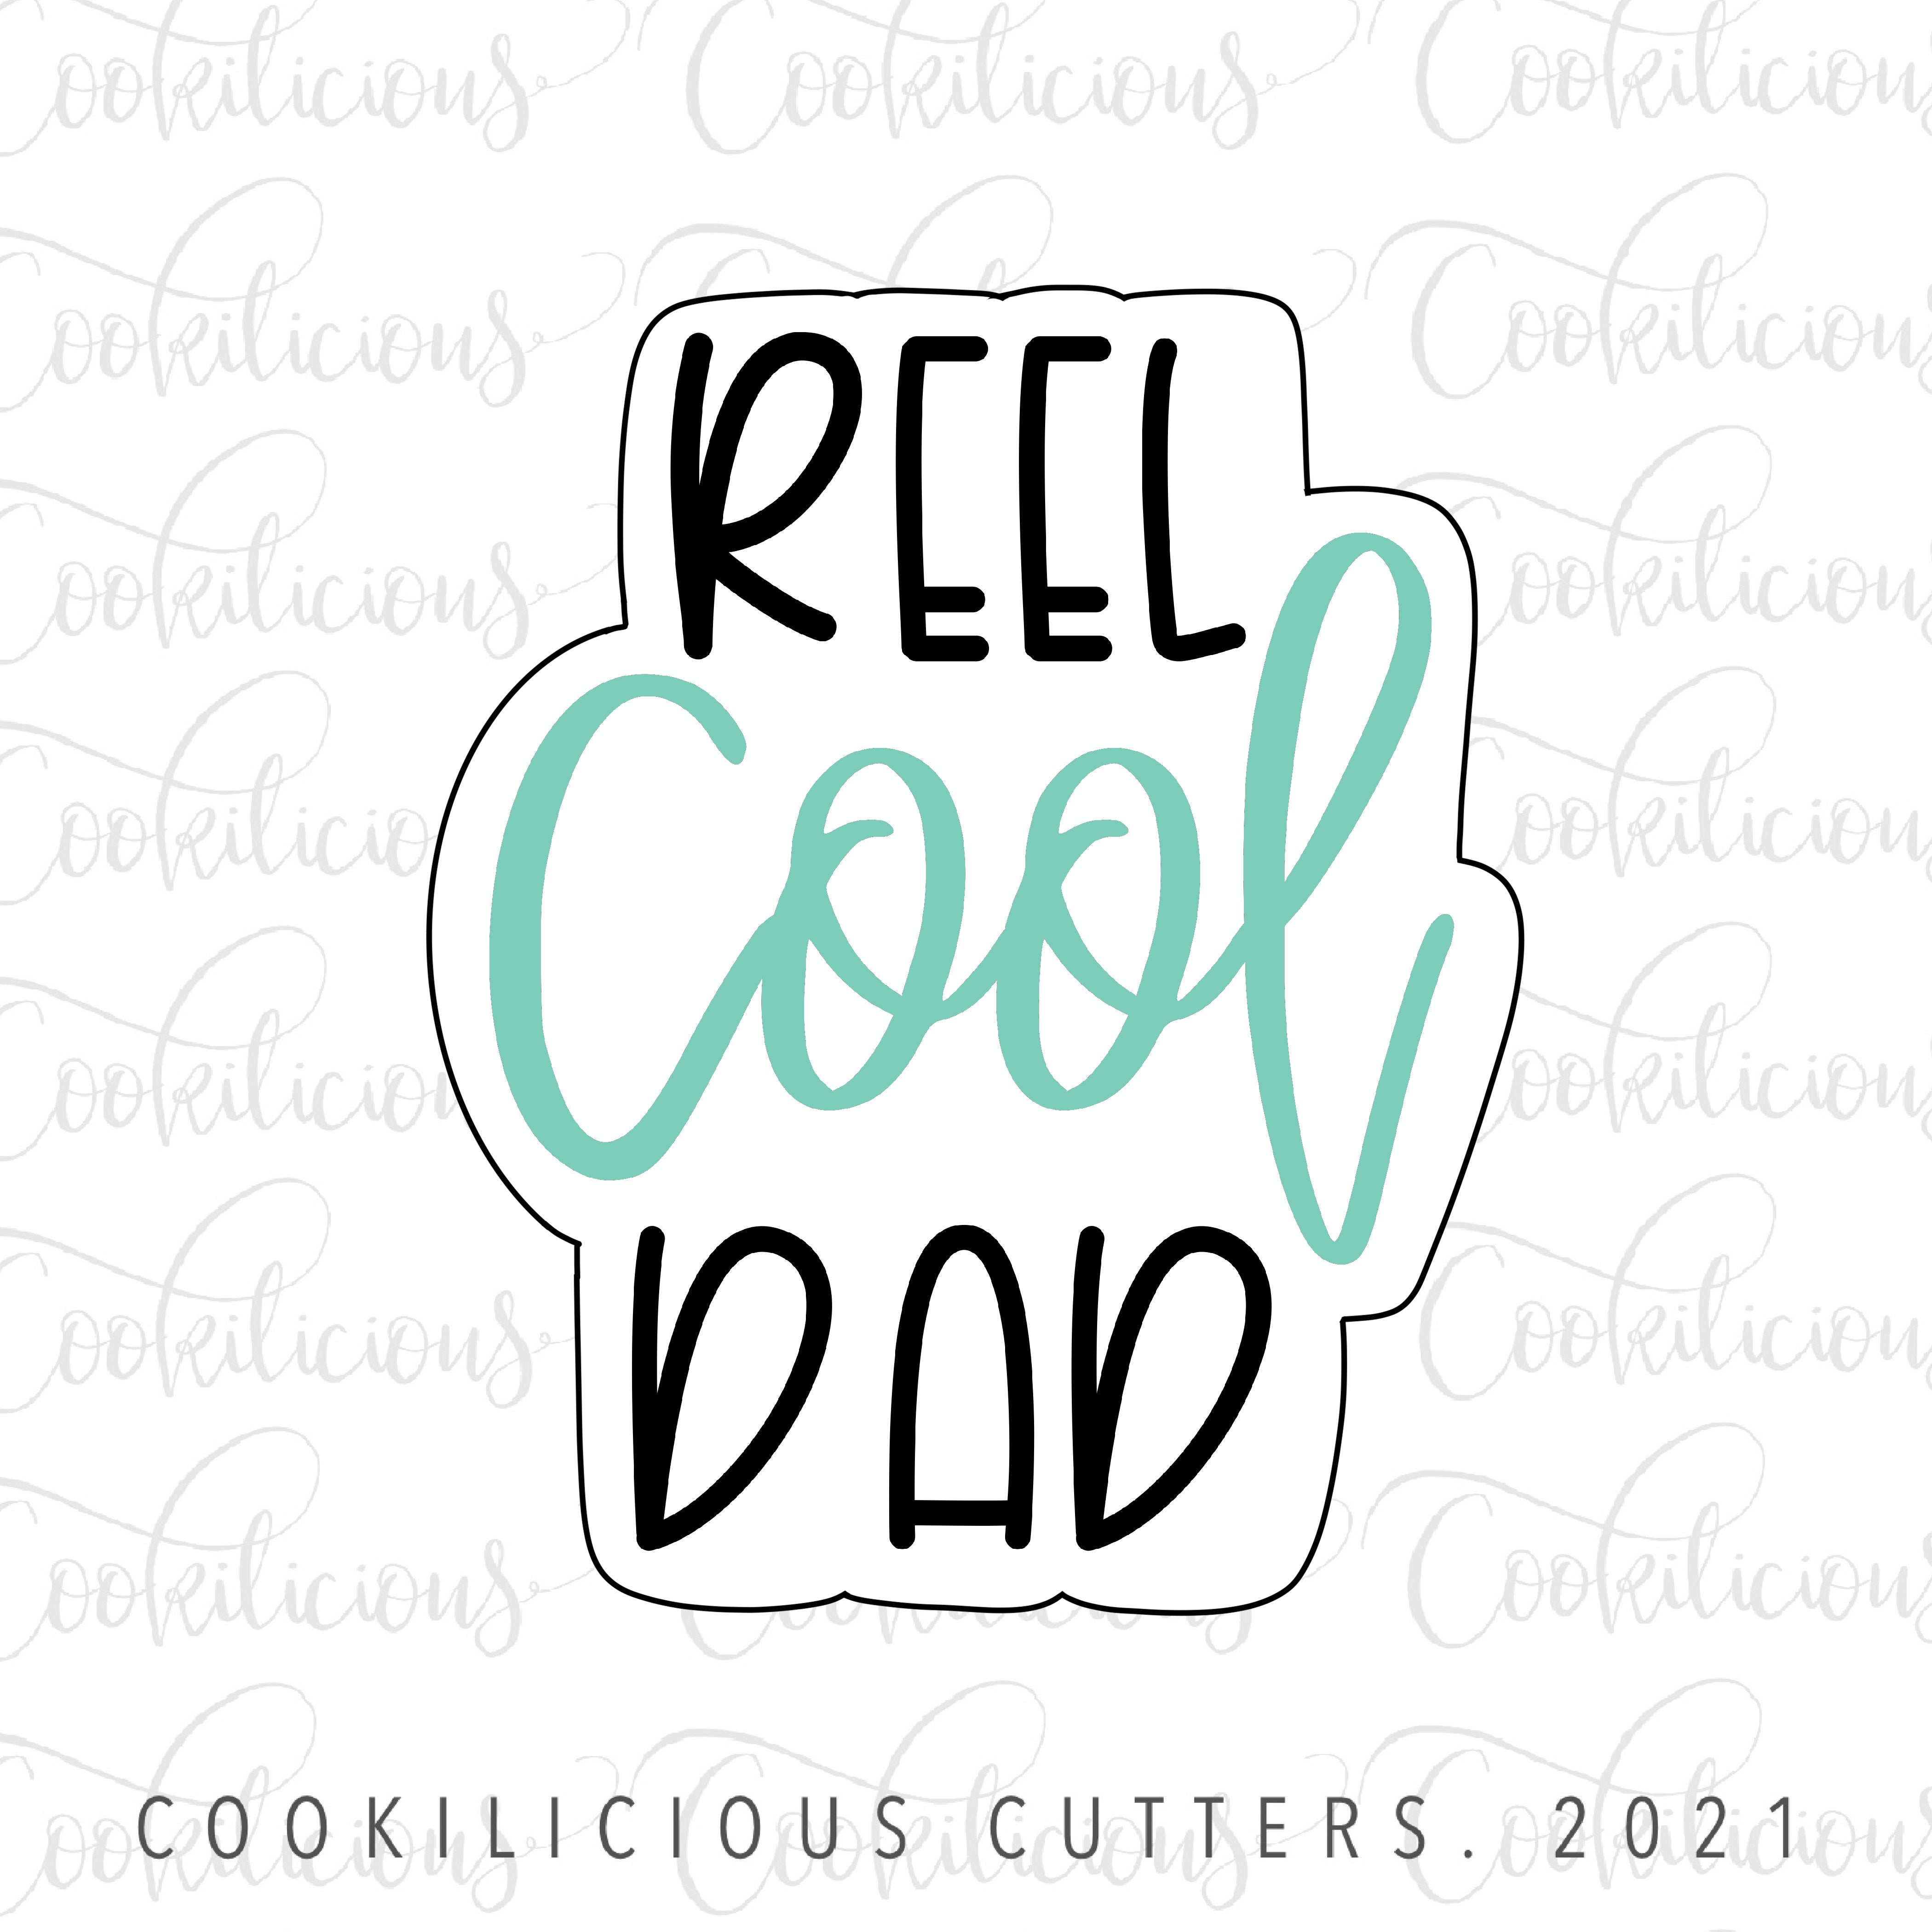 REEL COOL DAD – Pepper Pop Paper